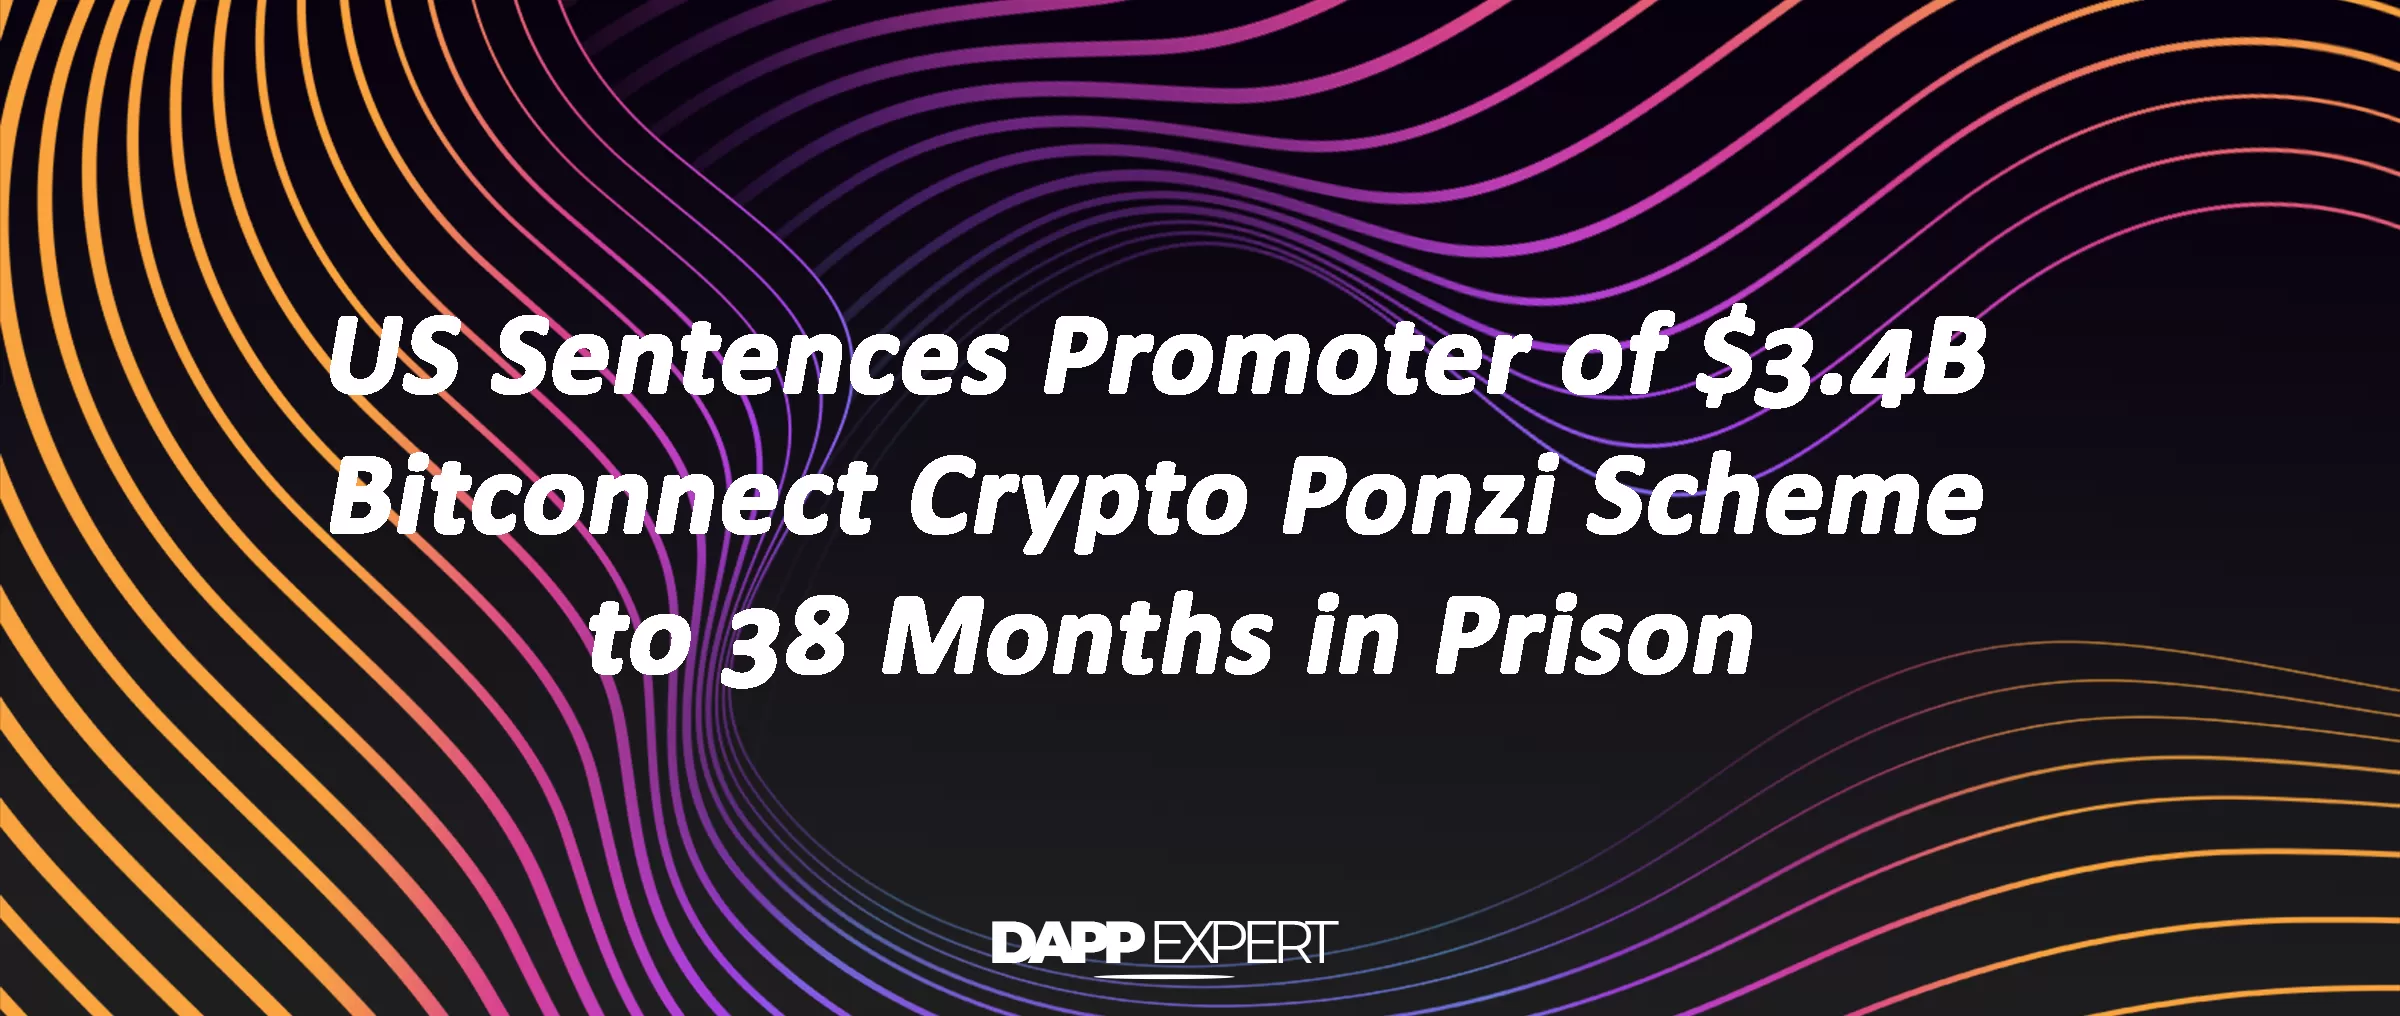 US Sentences Promoter of $3.4B Bitconnect Crypto Ponzi Scheme to 38 Months in Prison